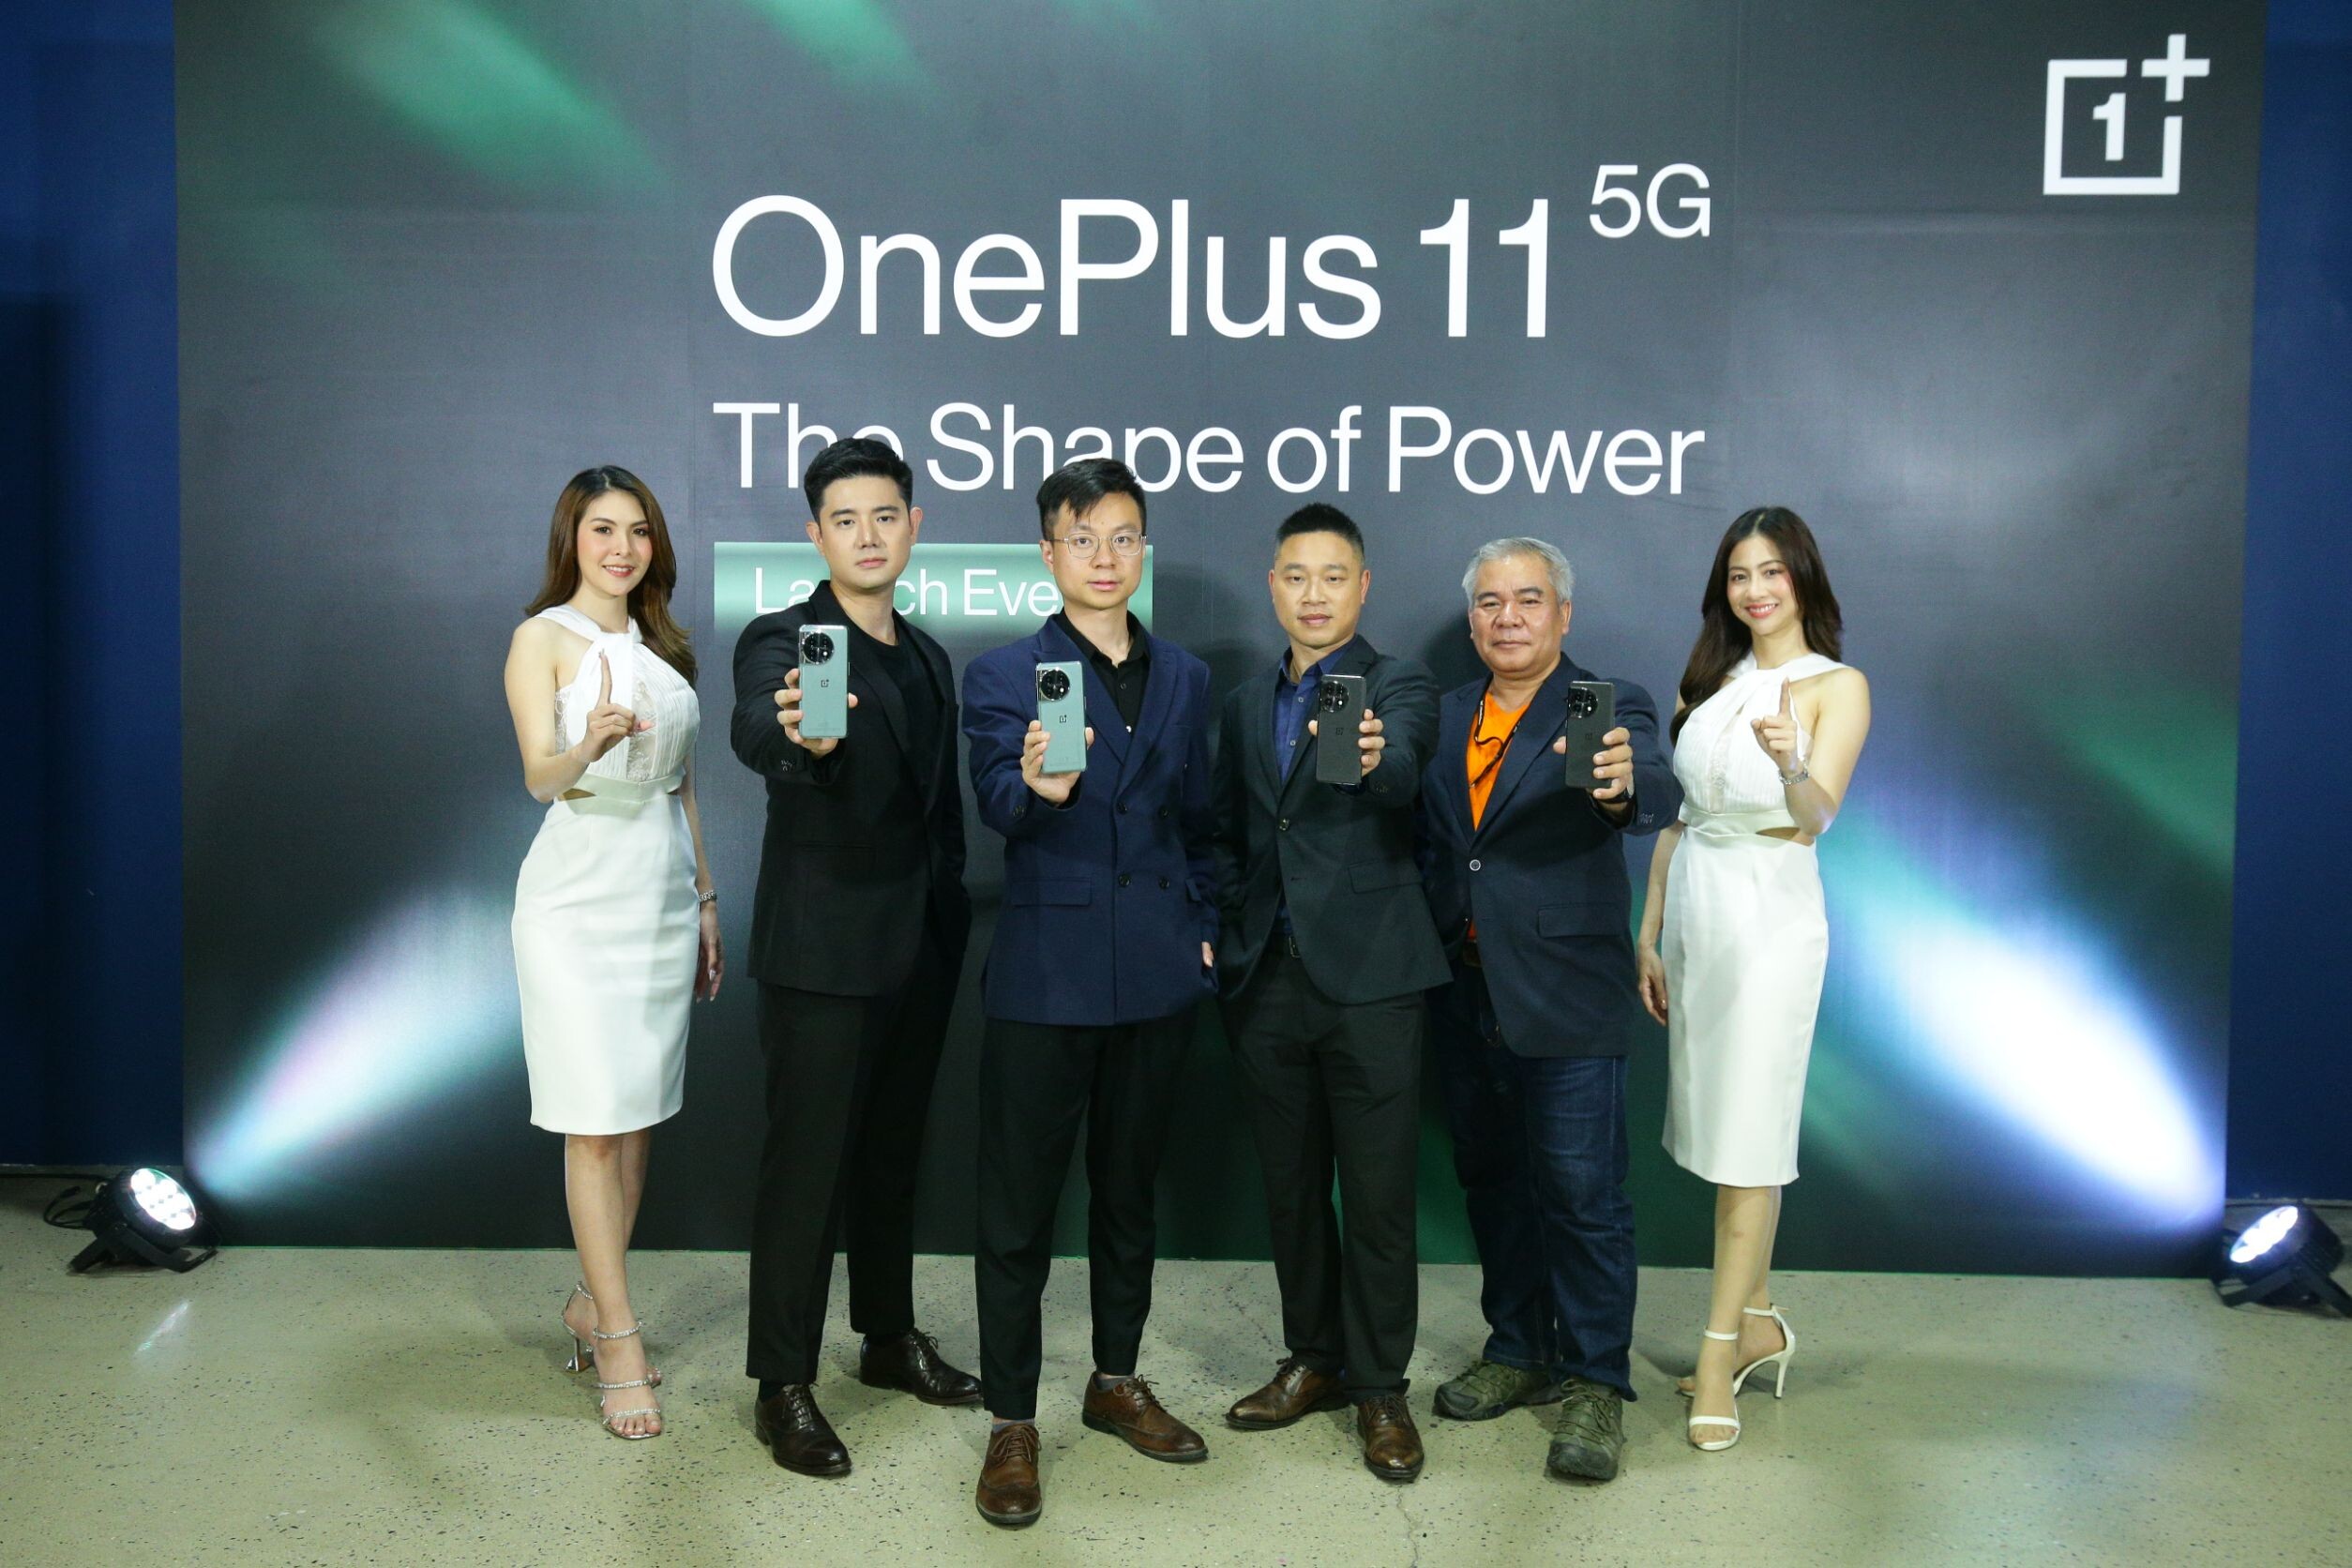 OnePlus ประเทศไทย เปิดตัว 2 ผลิตภัณฑ์เรือธง "OnePlus 11 5G" สมาร์ทโฟนเรือธงสุดล้ำยุค มาพร้อมหูฟัง OnePlus Bus Pro 2